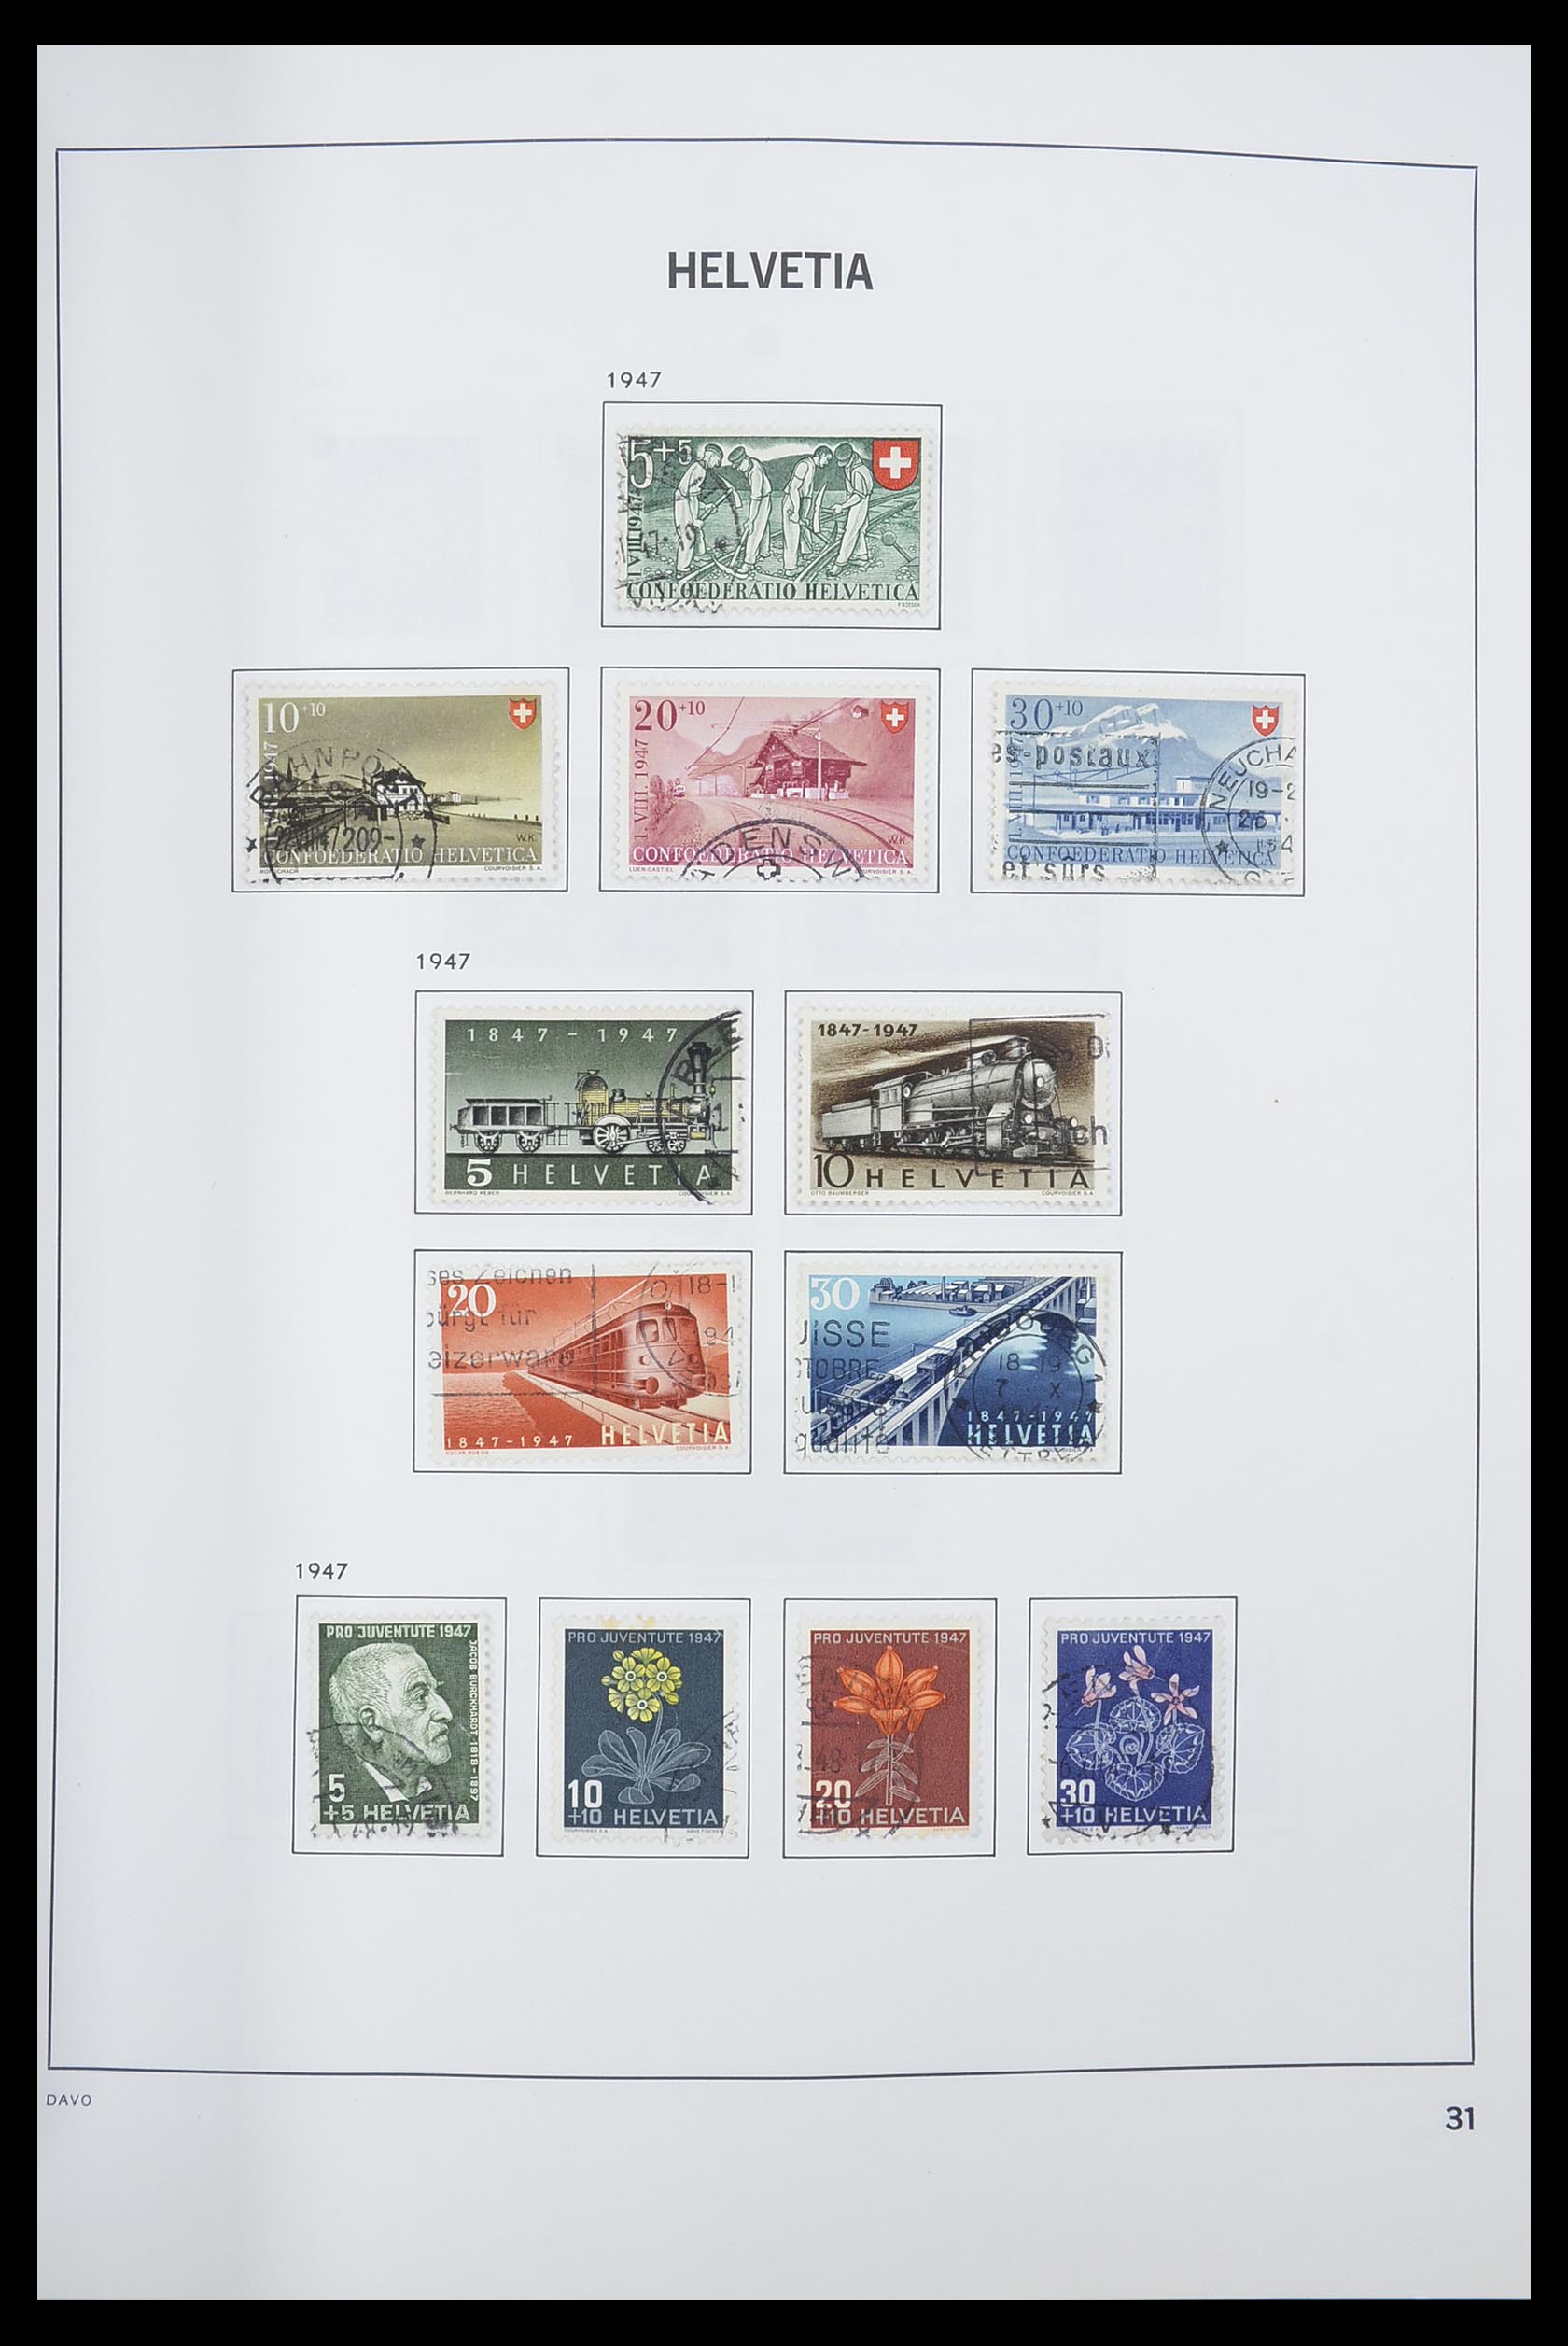 33559 032 - Stamp collection 33559 Switzerland 1850-2000.